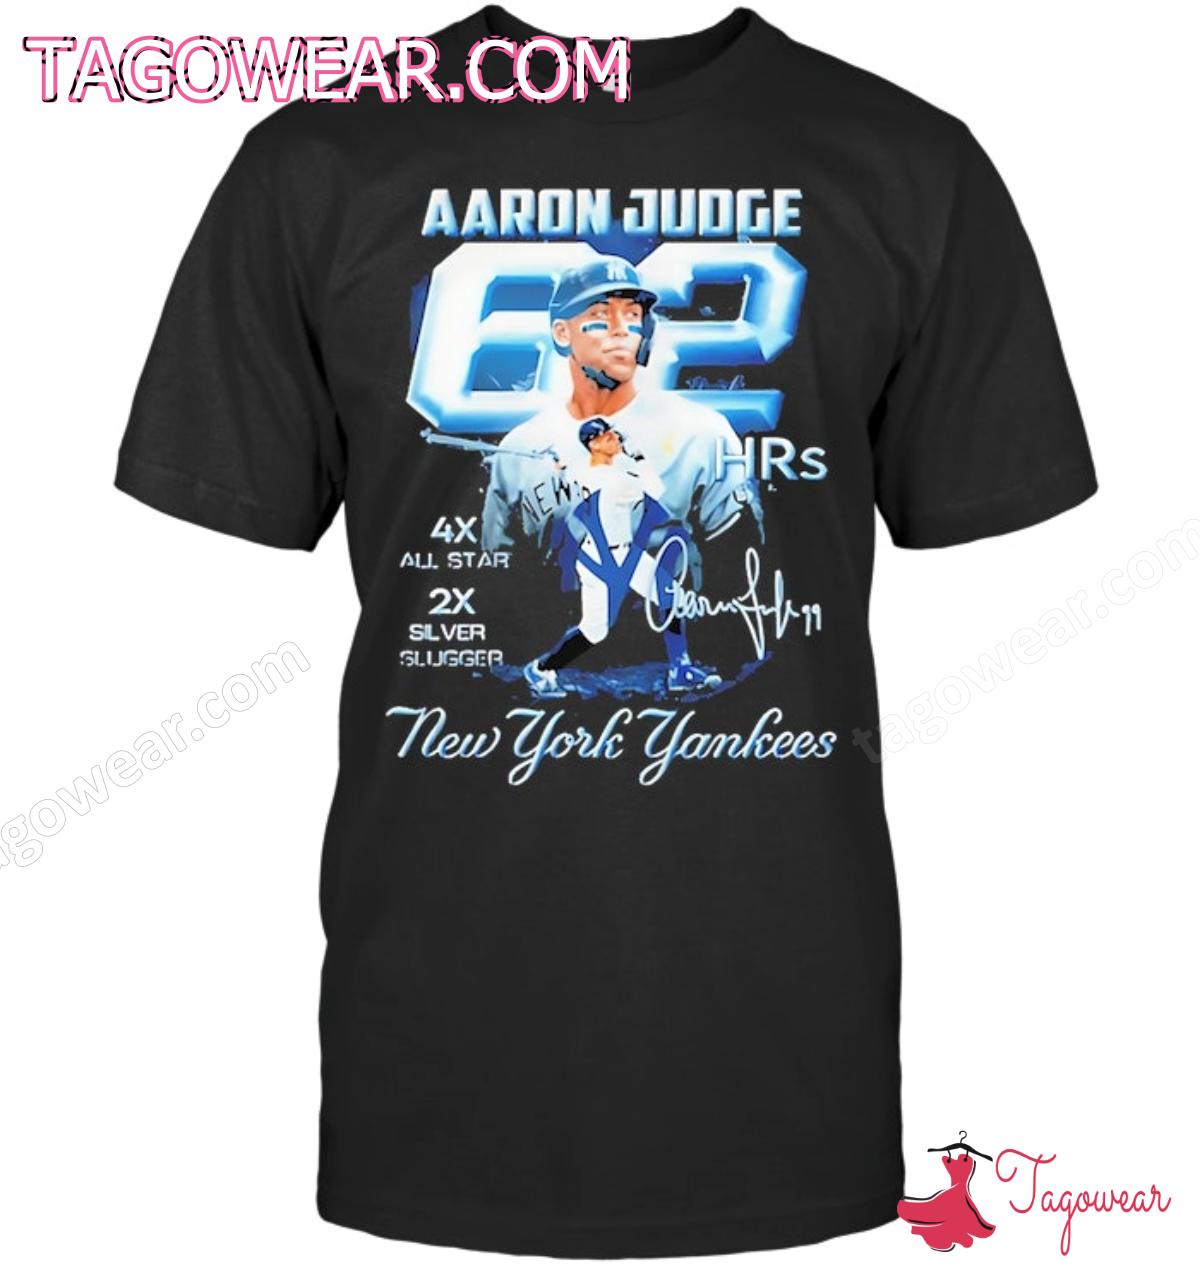 Aaron Judge 62 New York Yankees Signature Shirt